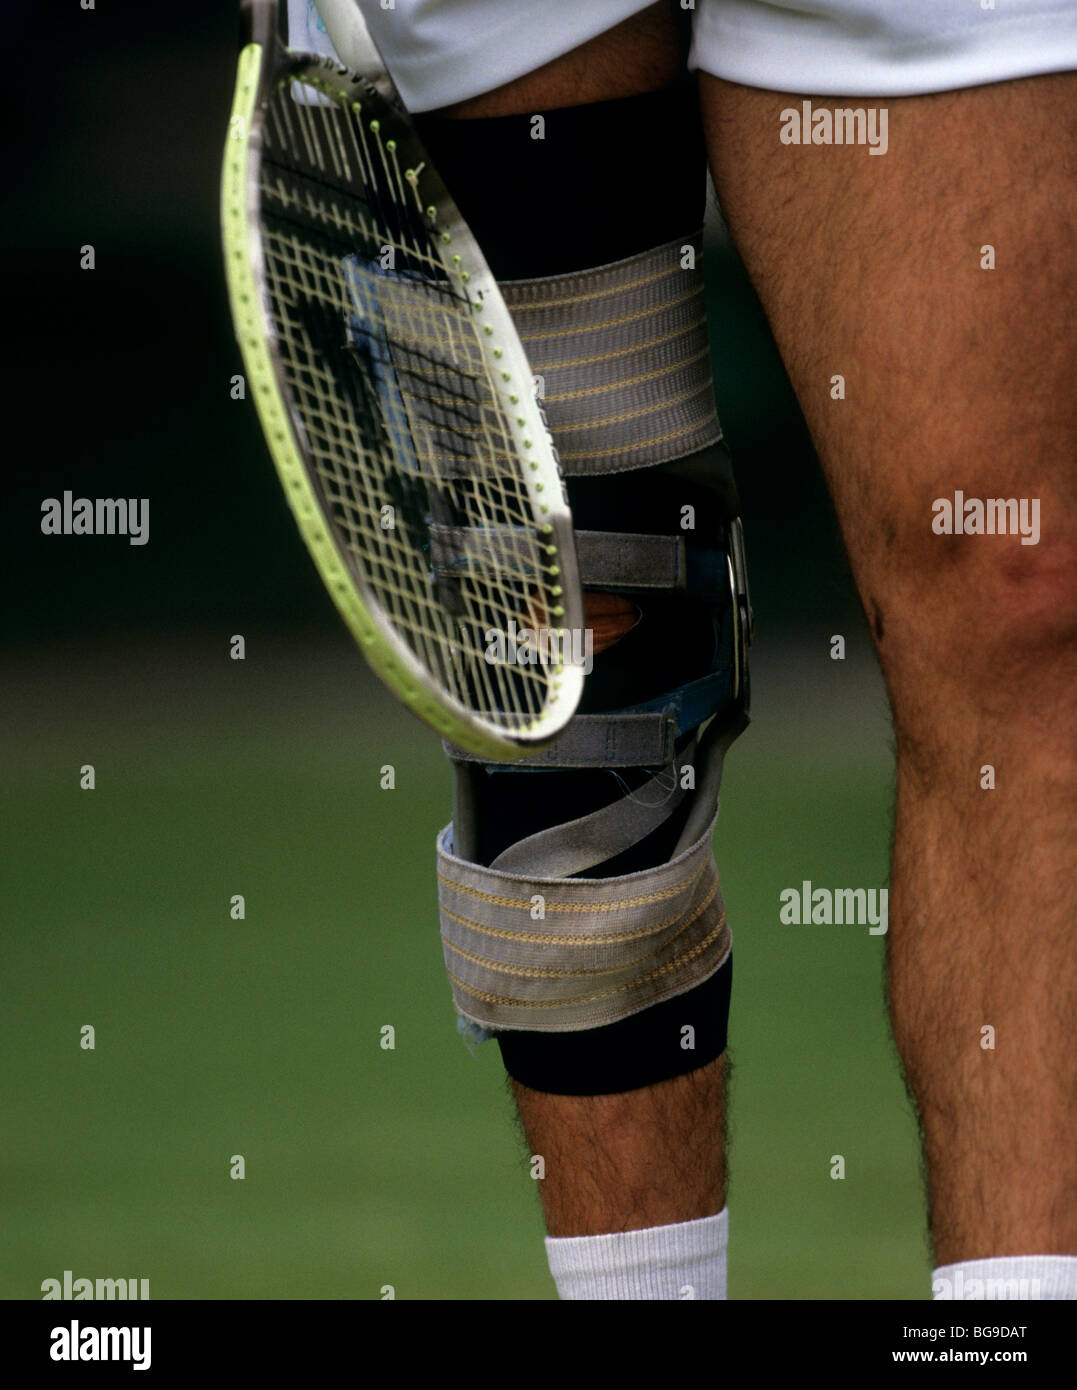 Tennis player wearing a knee brace Stock Photo - Alamy